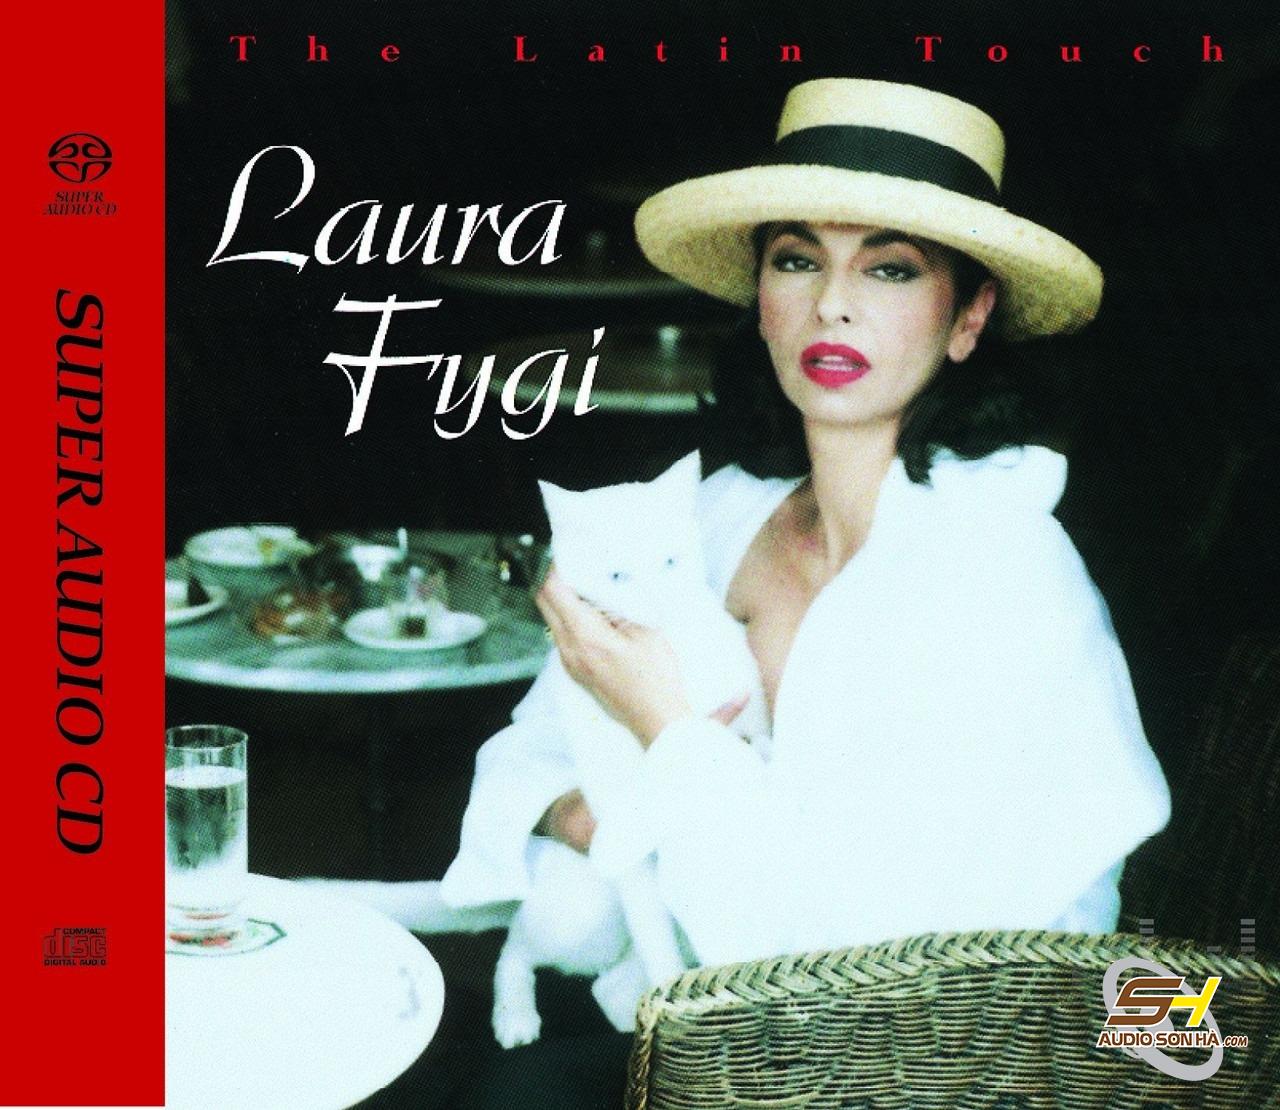 CD LAURA FUGI ( SACD)